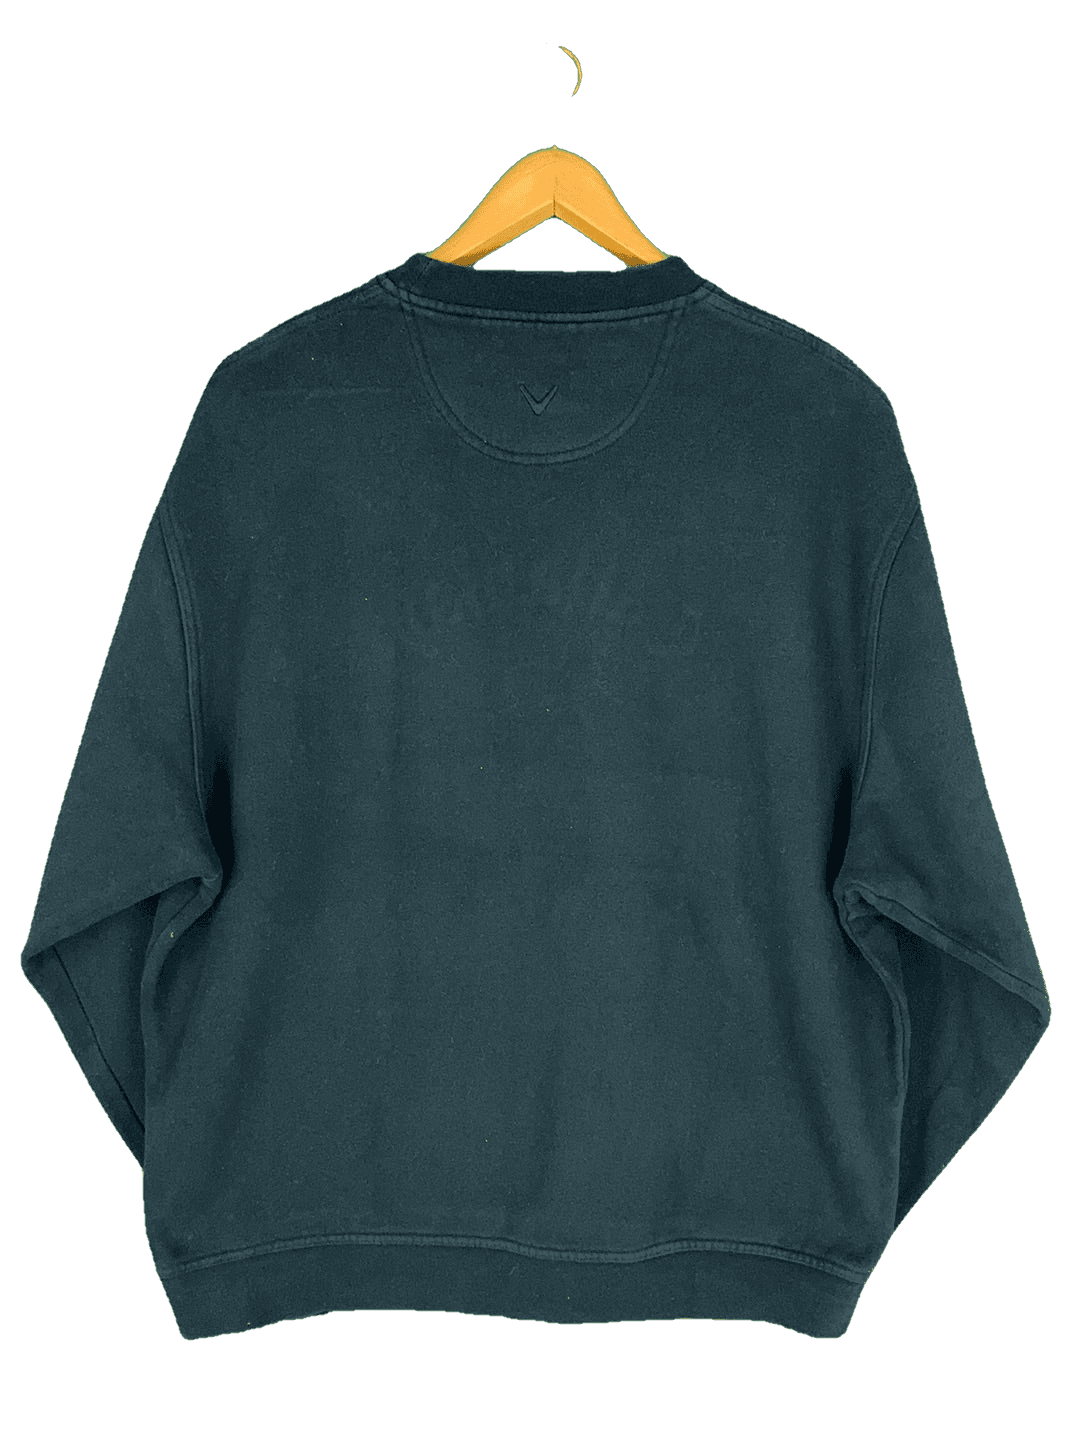 Callaway Sweater (M)